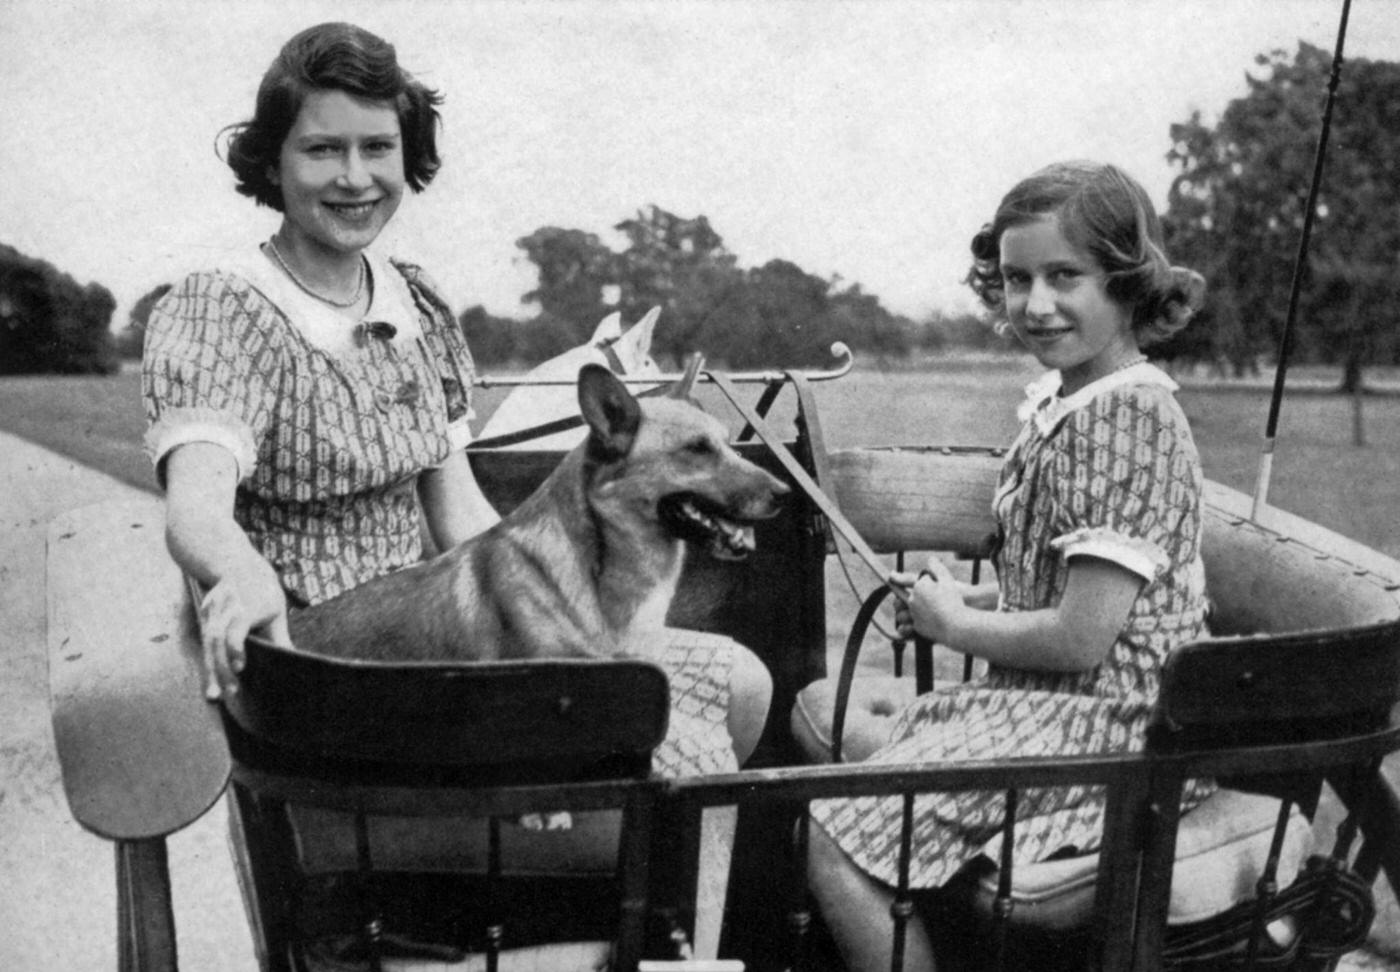 Princess Elizabeth of England (future queen Elizabeth II) and her sister princess Margaret in gradens of Windsor, 1941